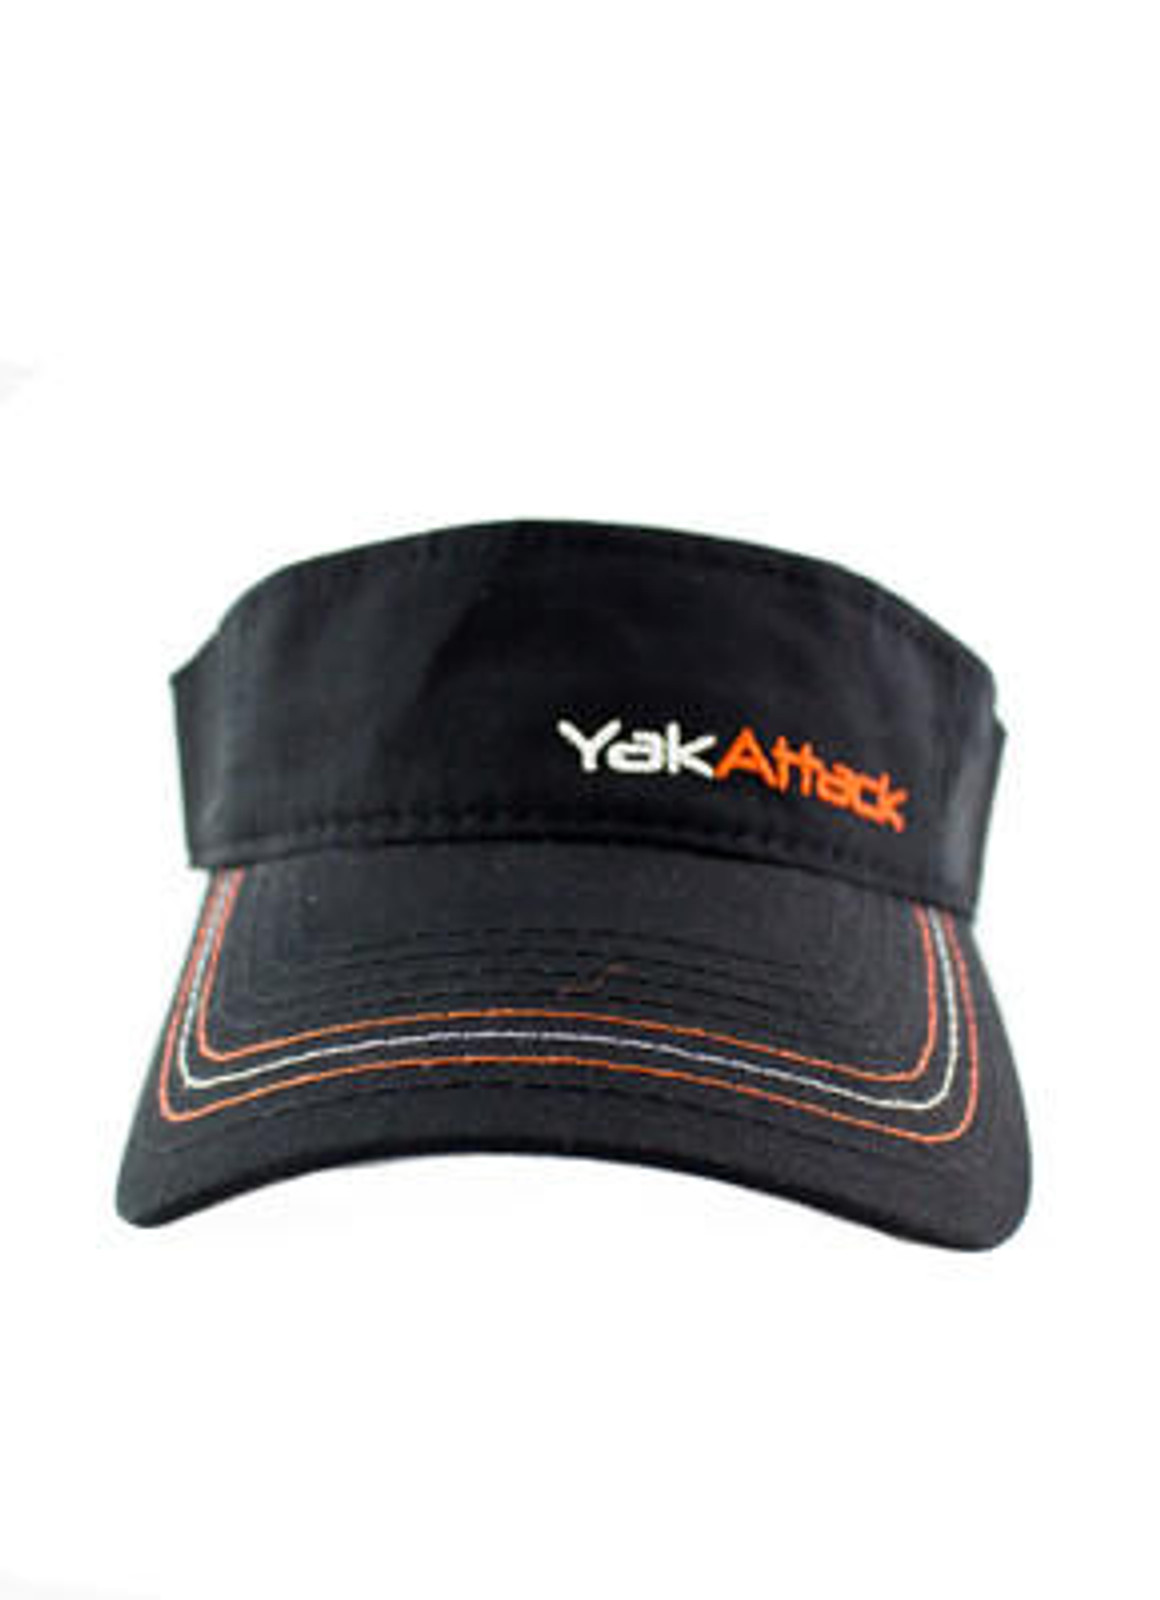  YakAttack Adjustable Visor, Black 